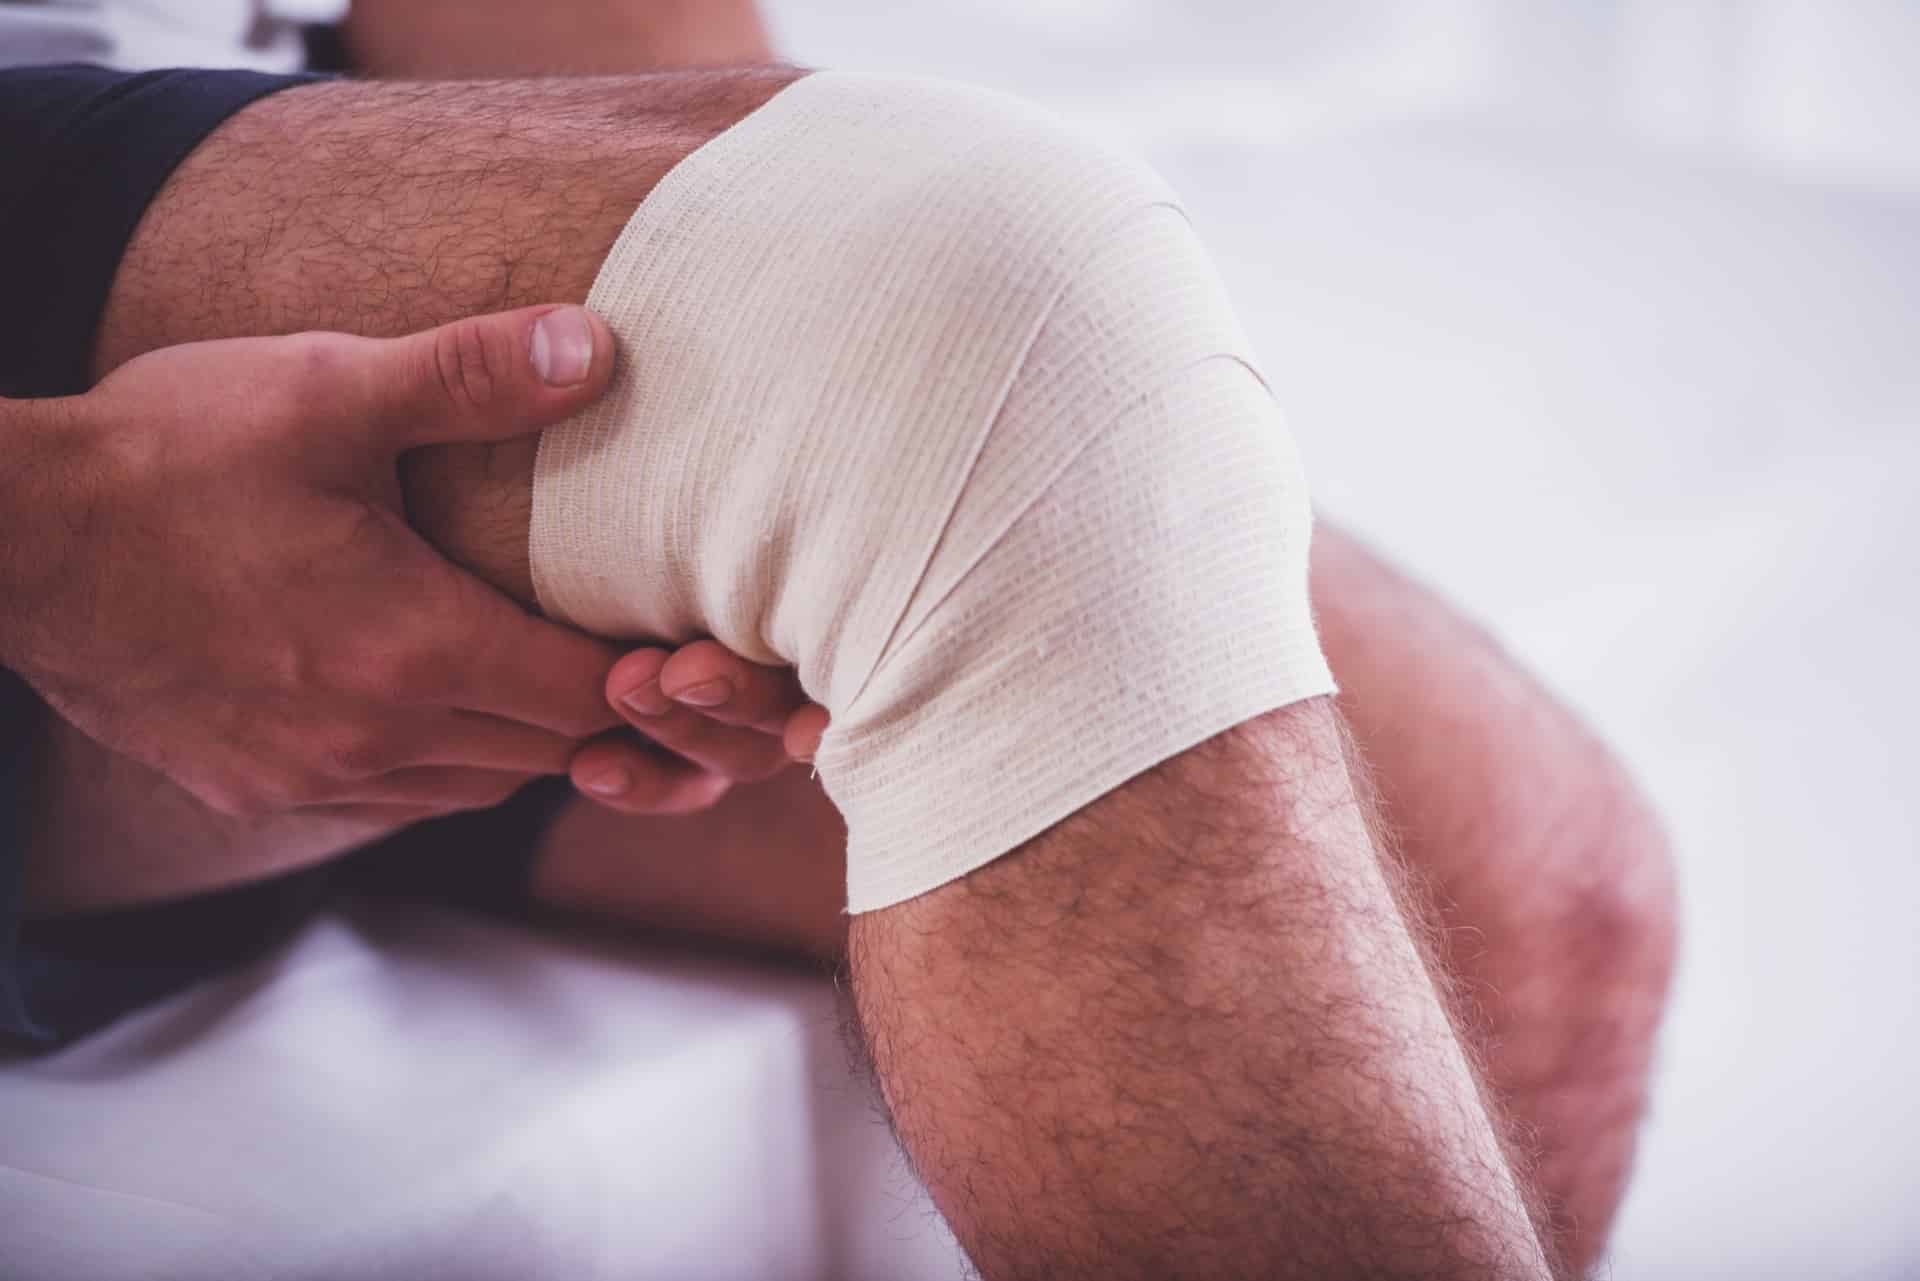 Image Of A Knee Injury